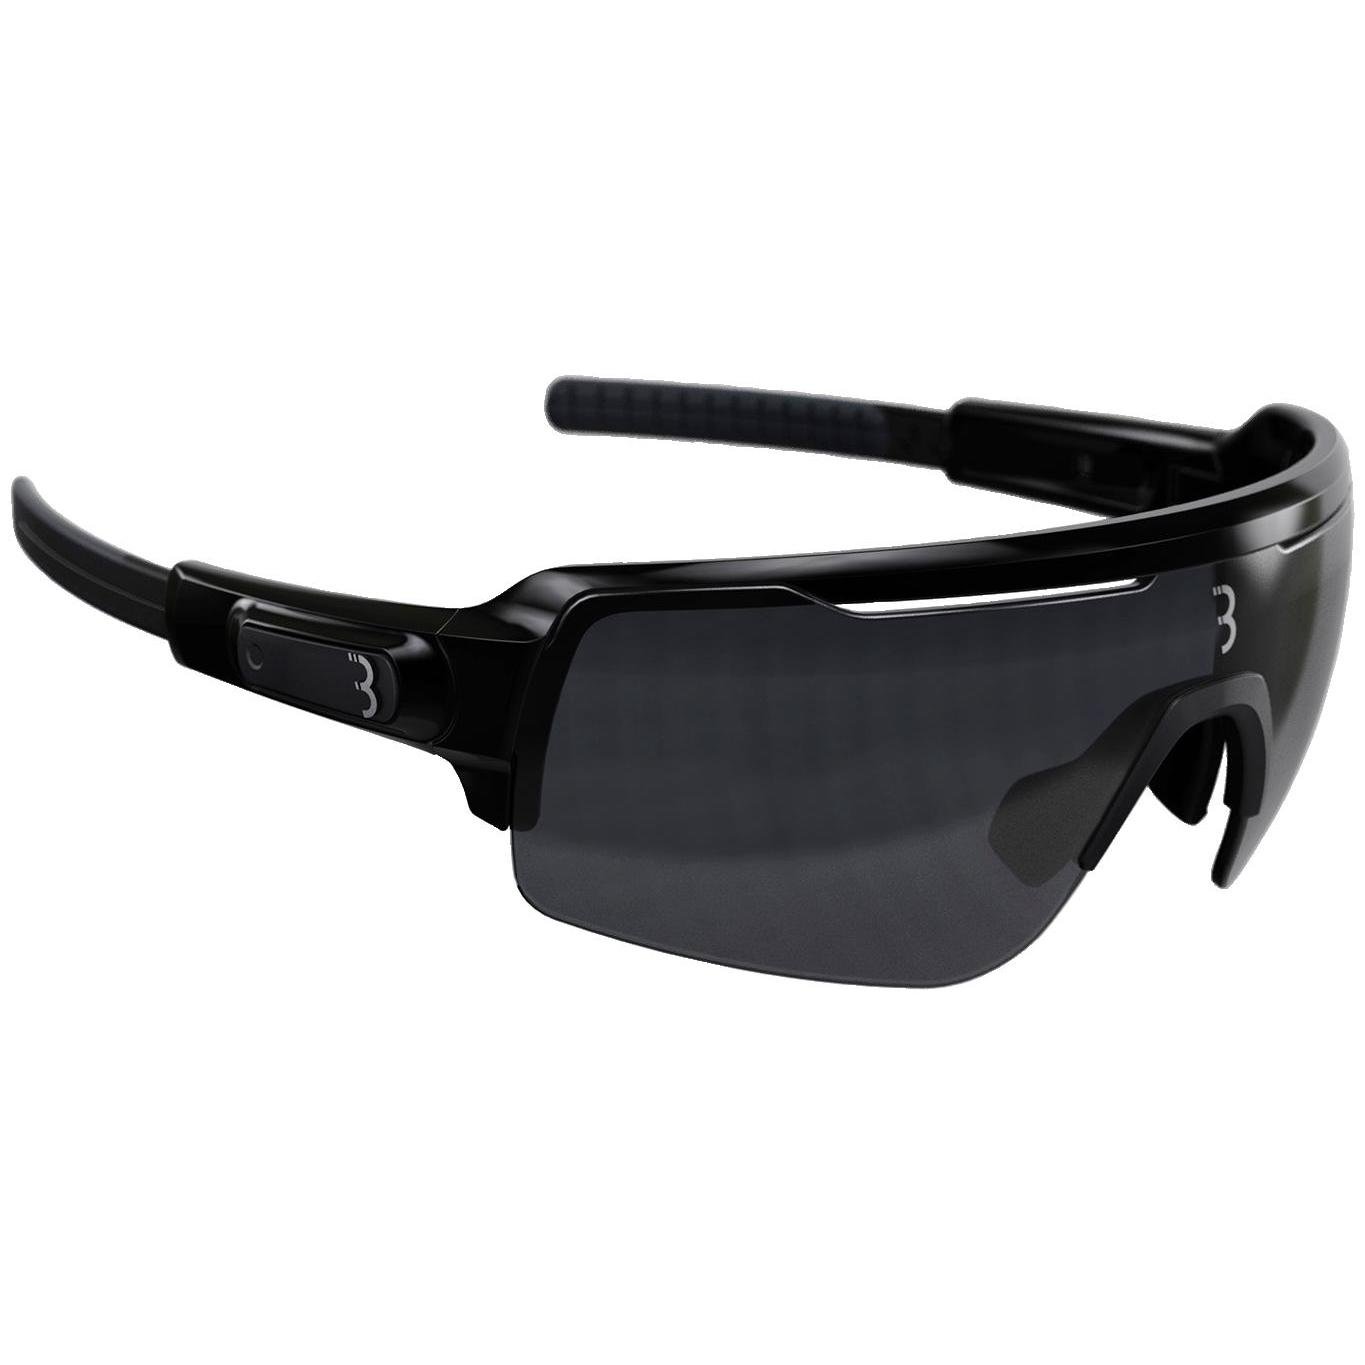 Очки велосипедные BBB 2019 sunglasses Commander PC Smoke MLC silver lens PC clear, glossy black, BSG купить на ЖДБЗ.ру - фотография № 1